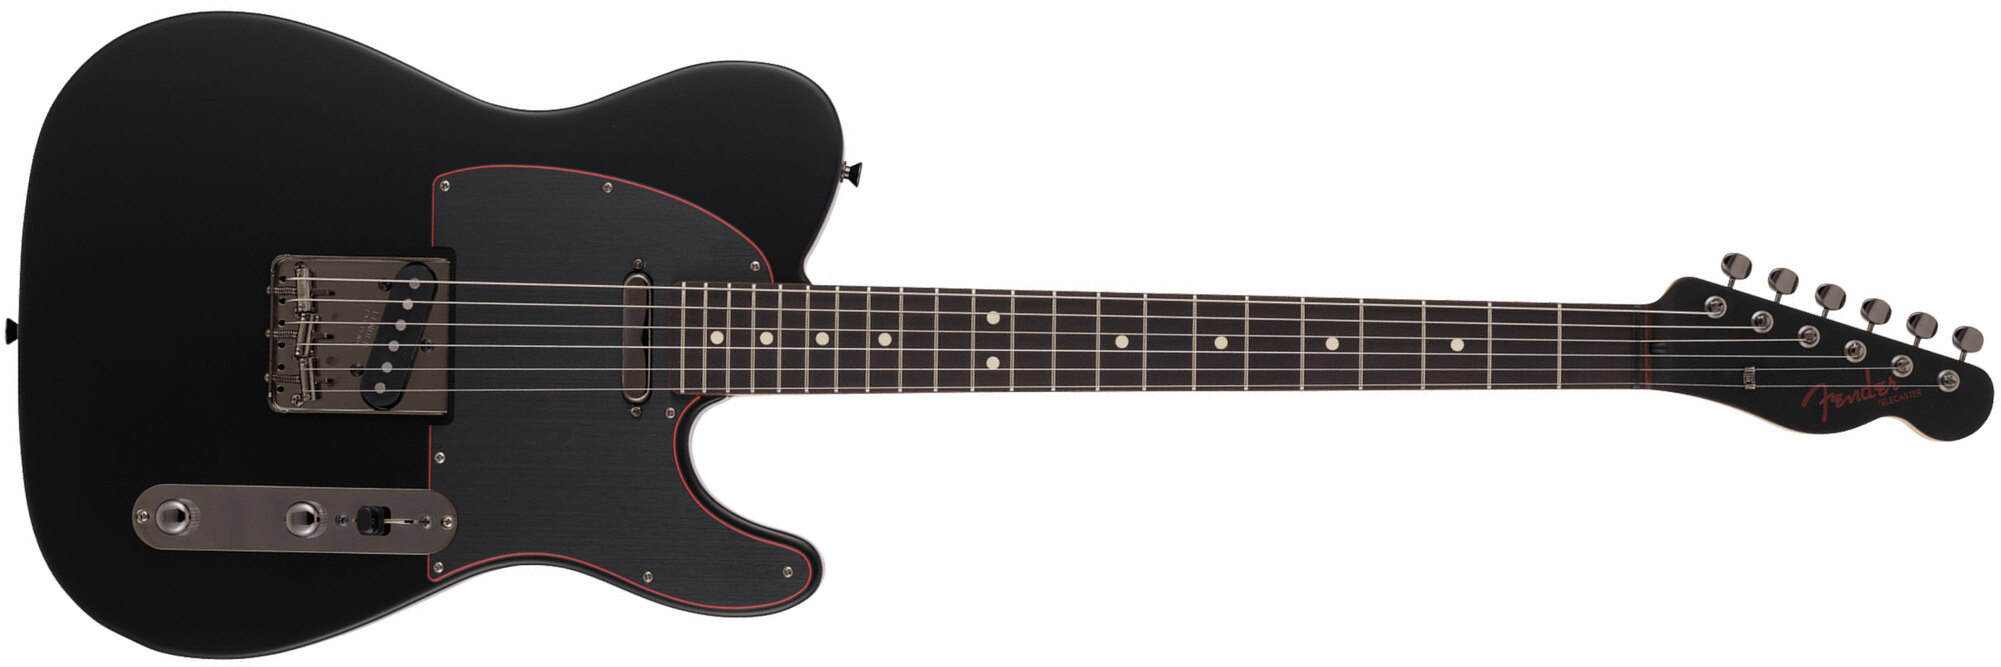 Fender Tele Hybrid Ii Jap 2s Ht Rw - Satin Black - Televorm elektrische gitaar - Main picture